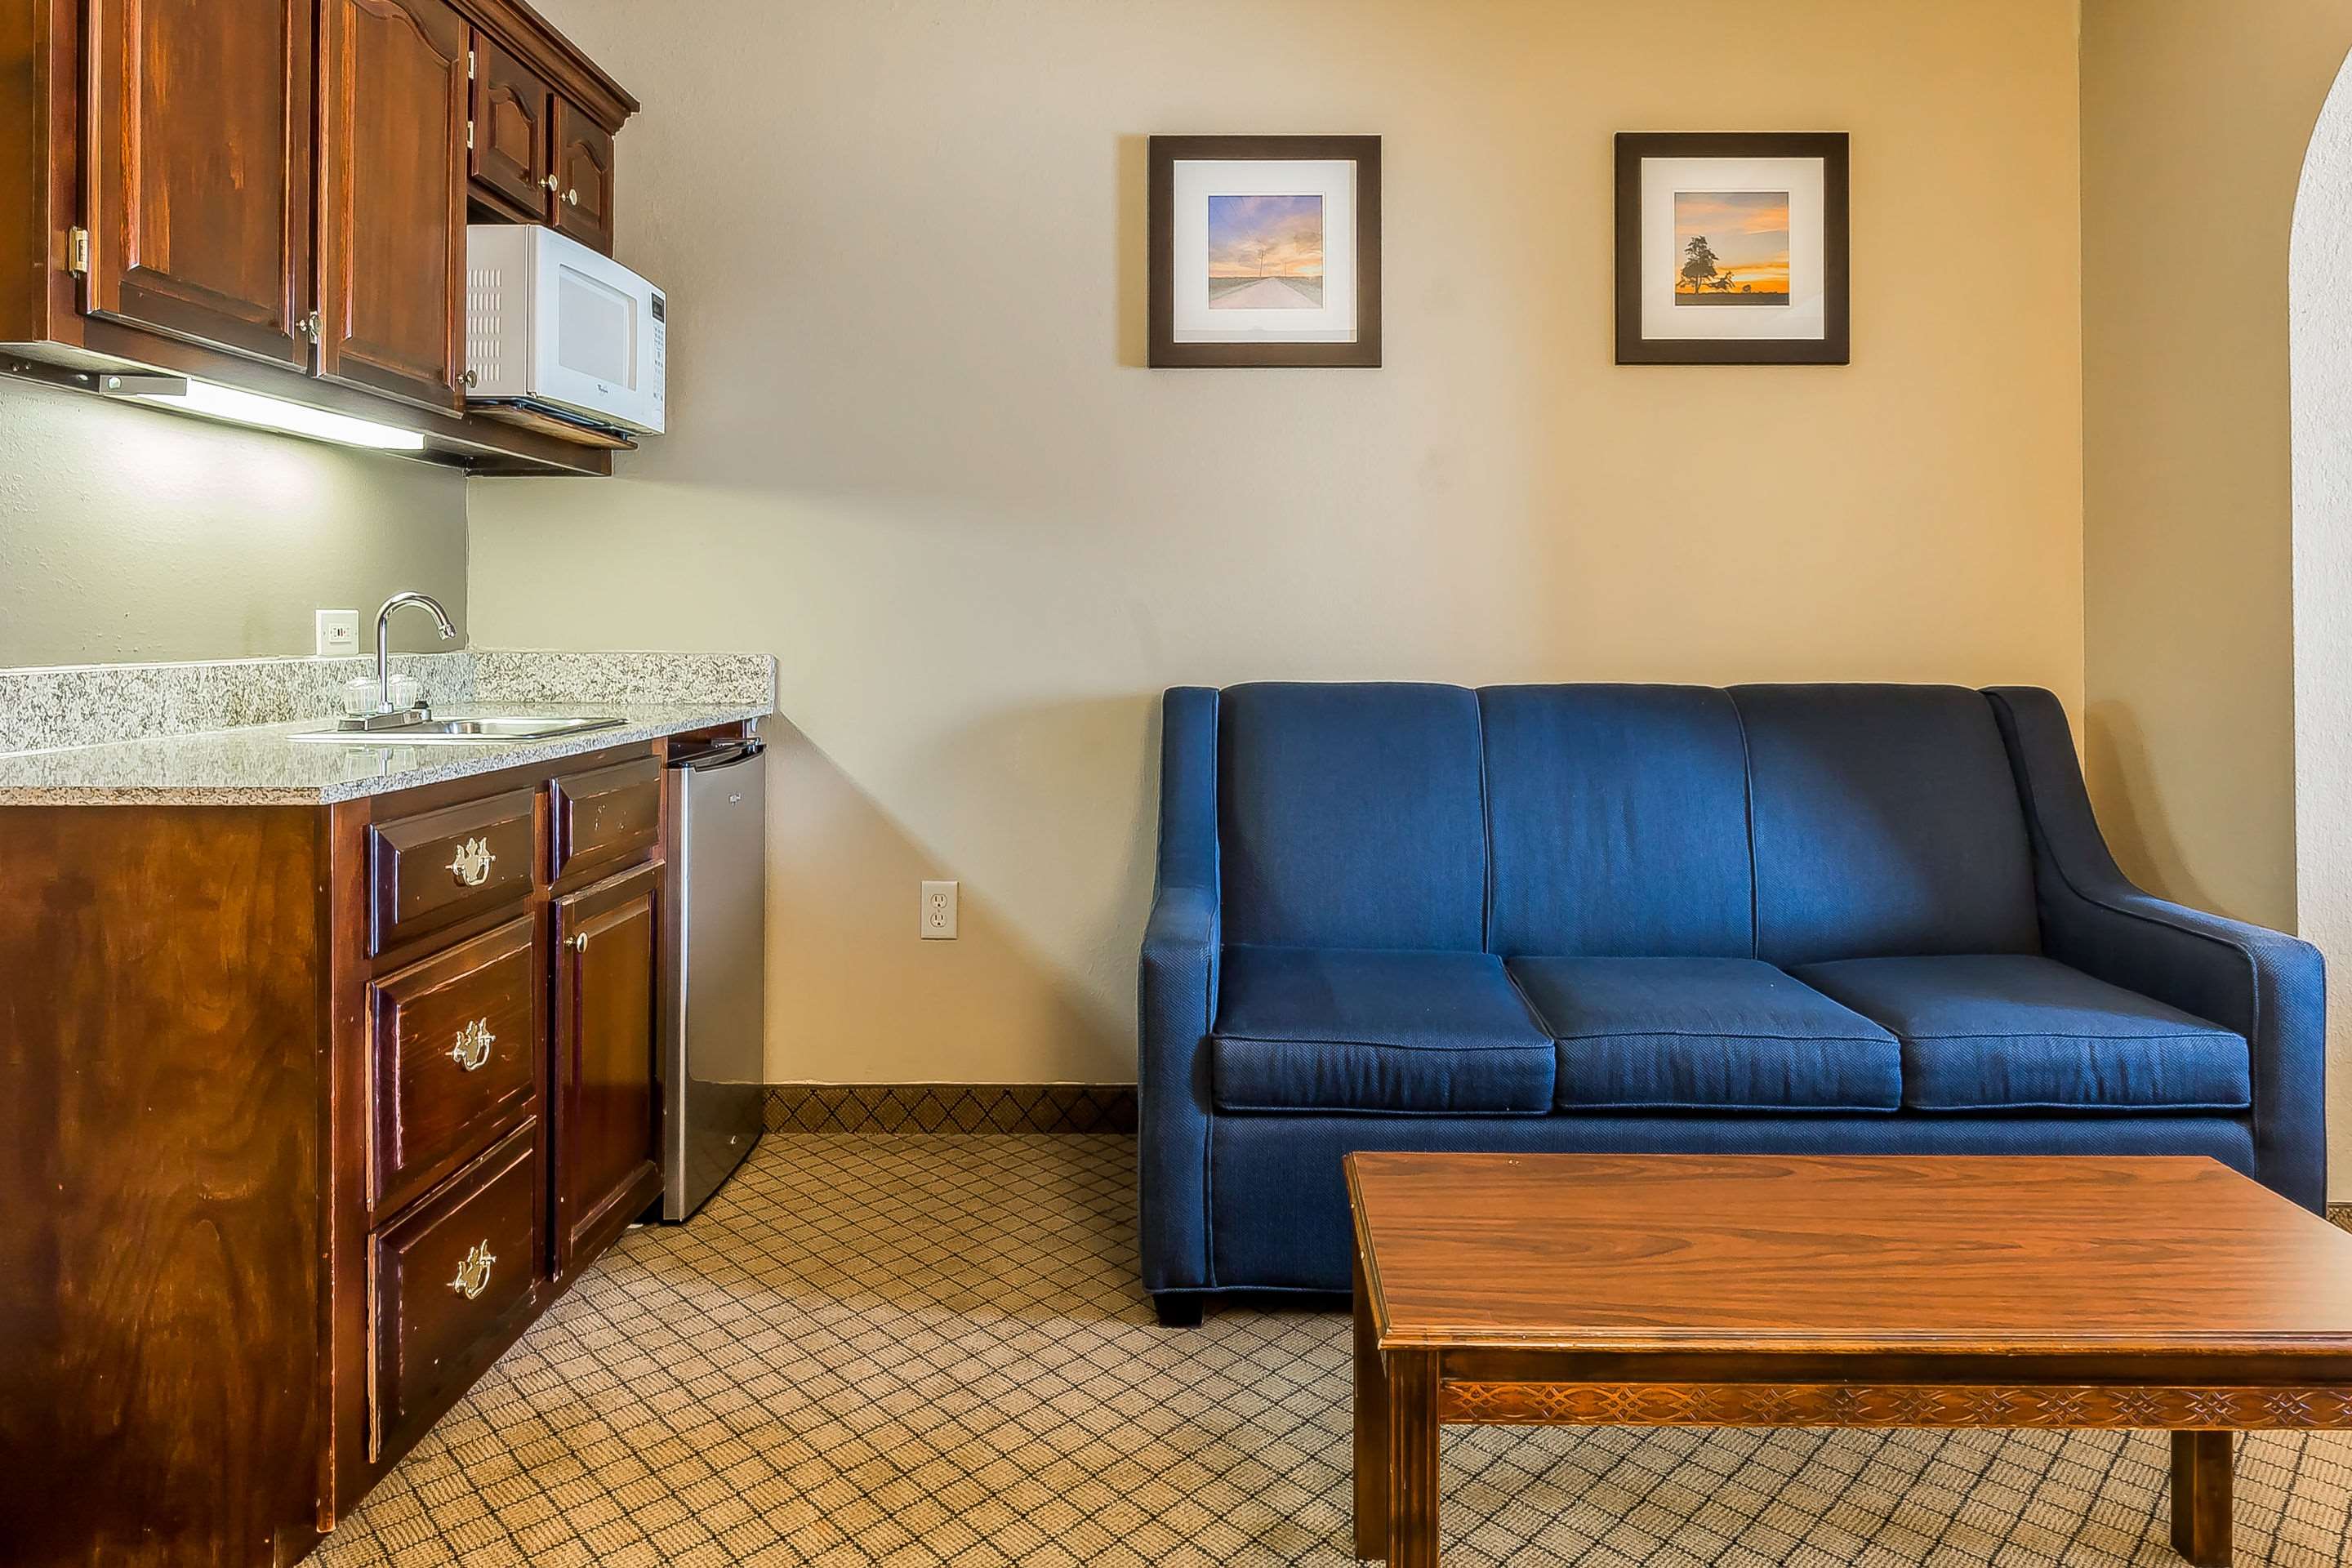 Comfort Inn & Suites Mishawaka-South Bend Photo